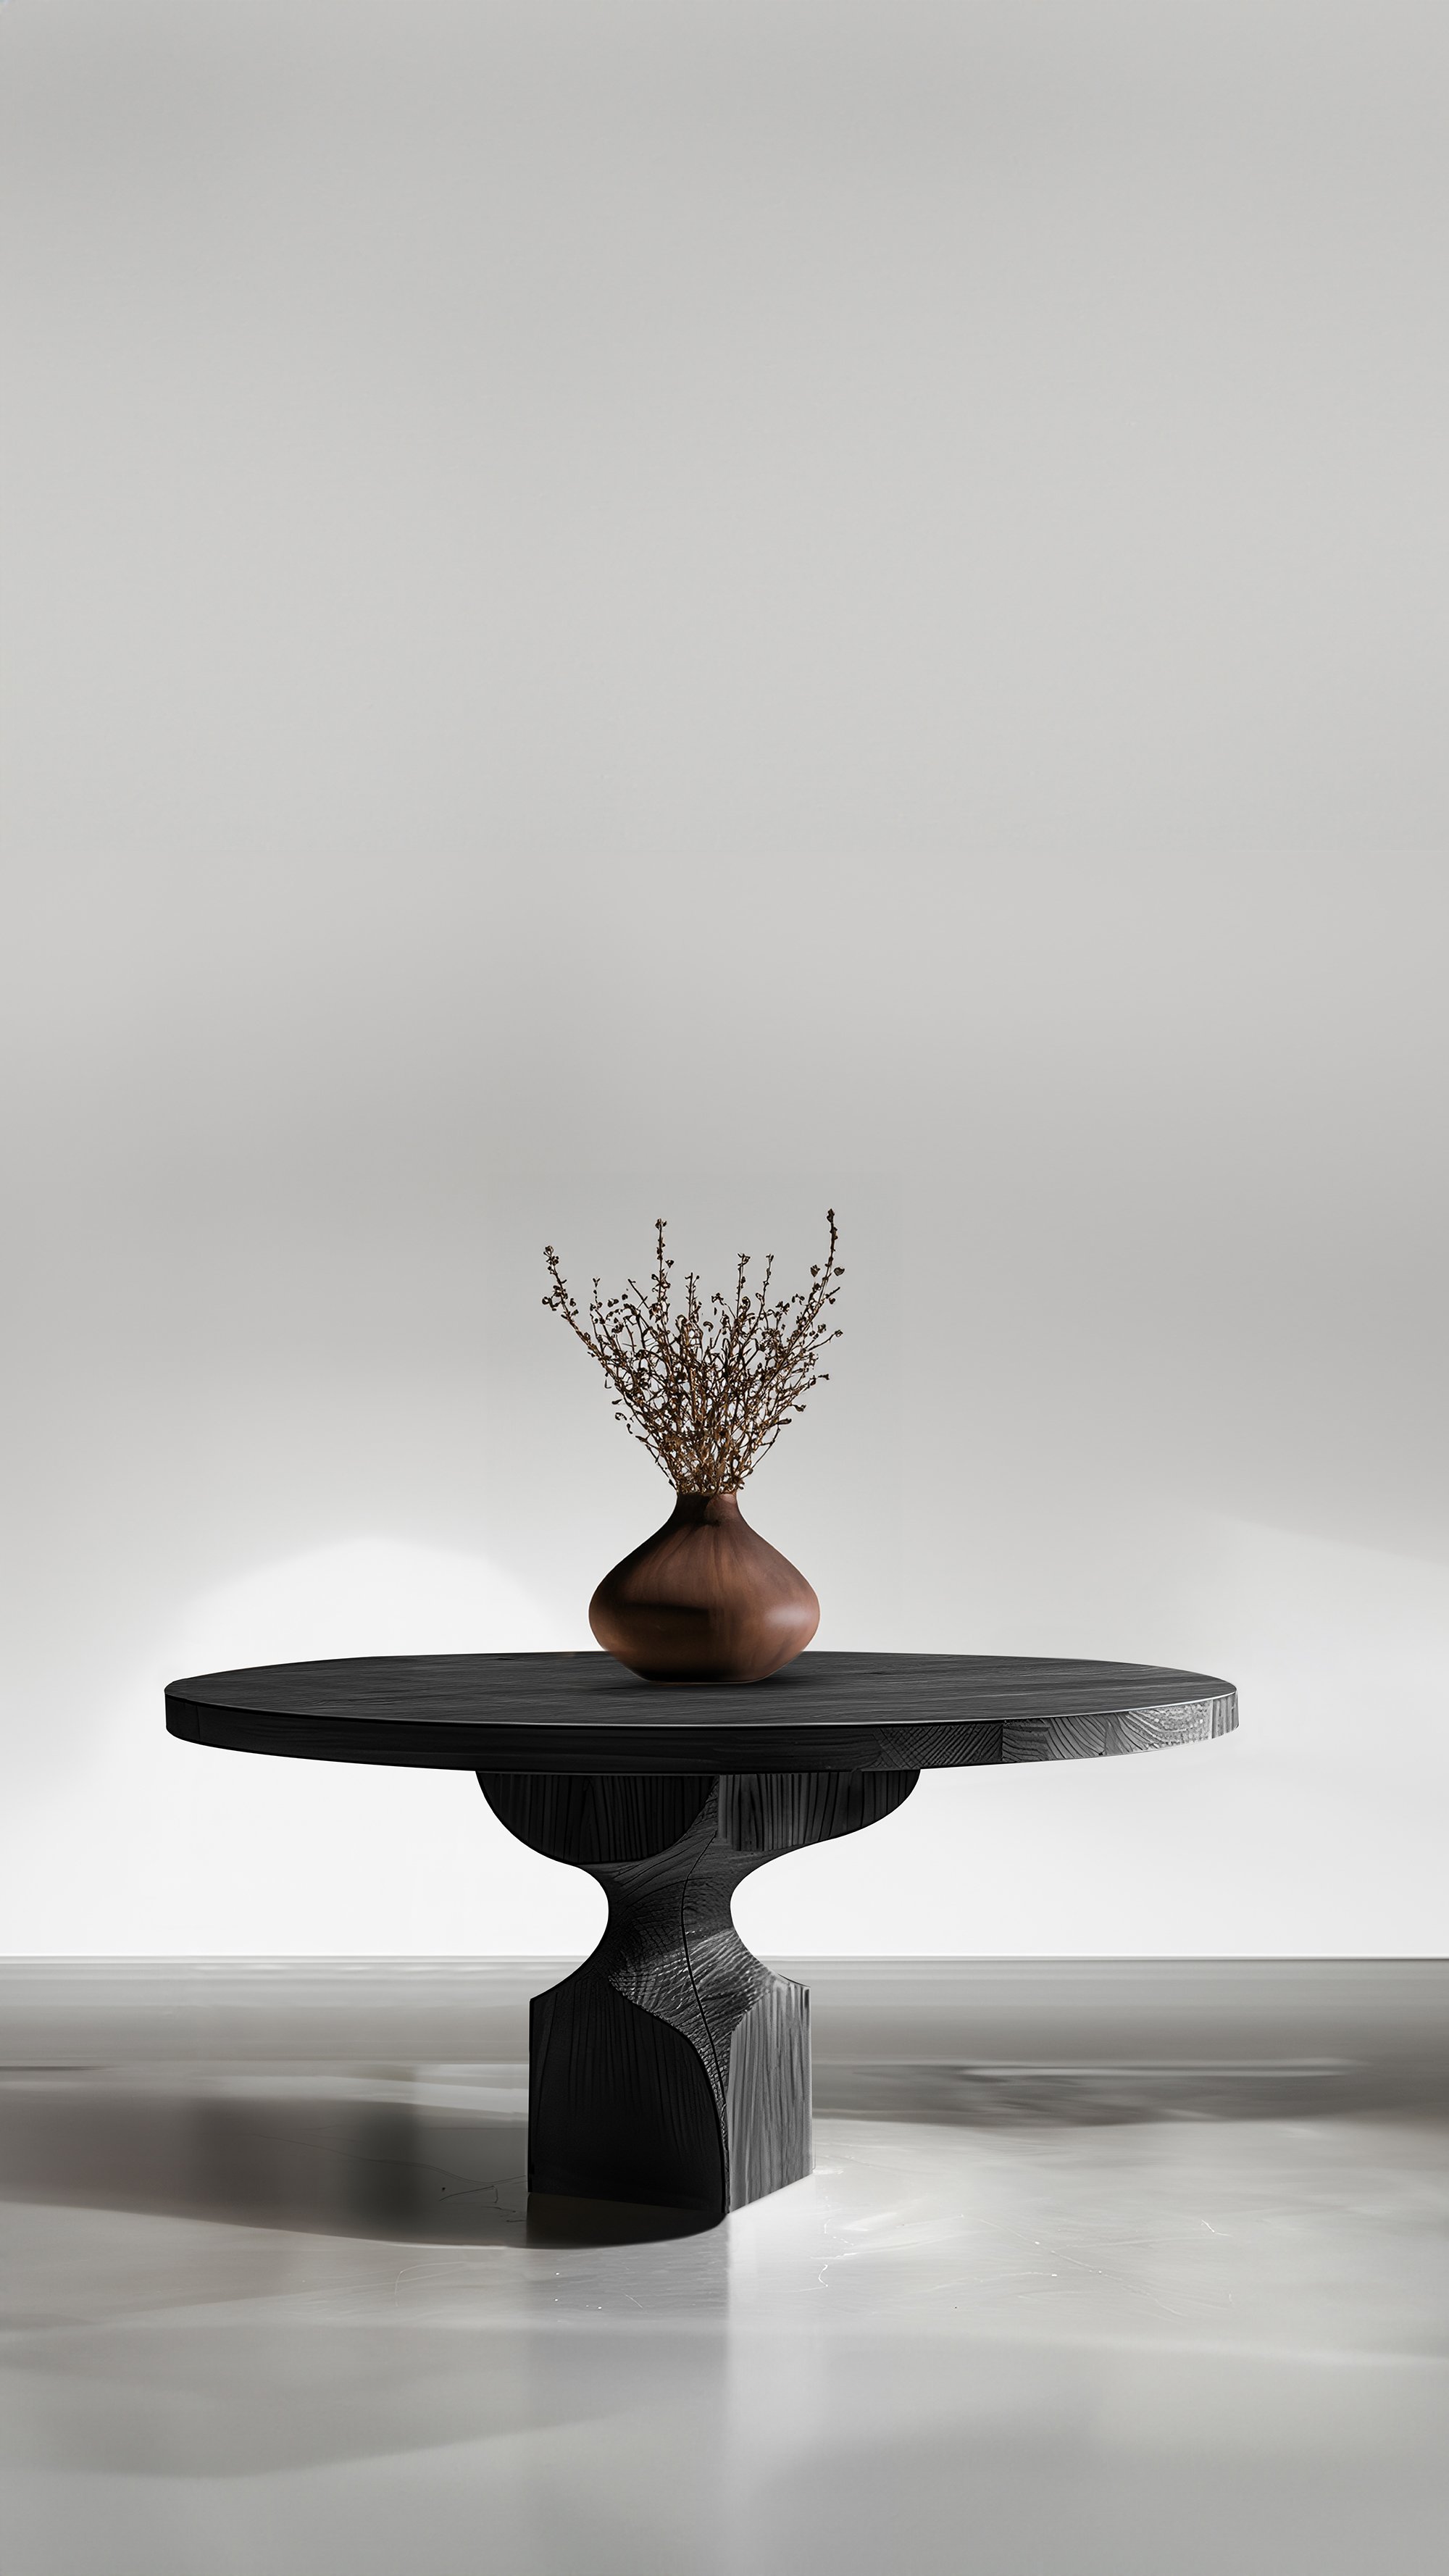 Socle Console Tables, Sleek Design in Black Wood by Joel Escalona No24 6.jpg